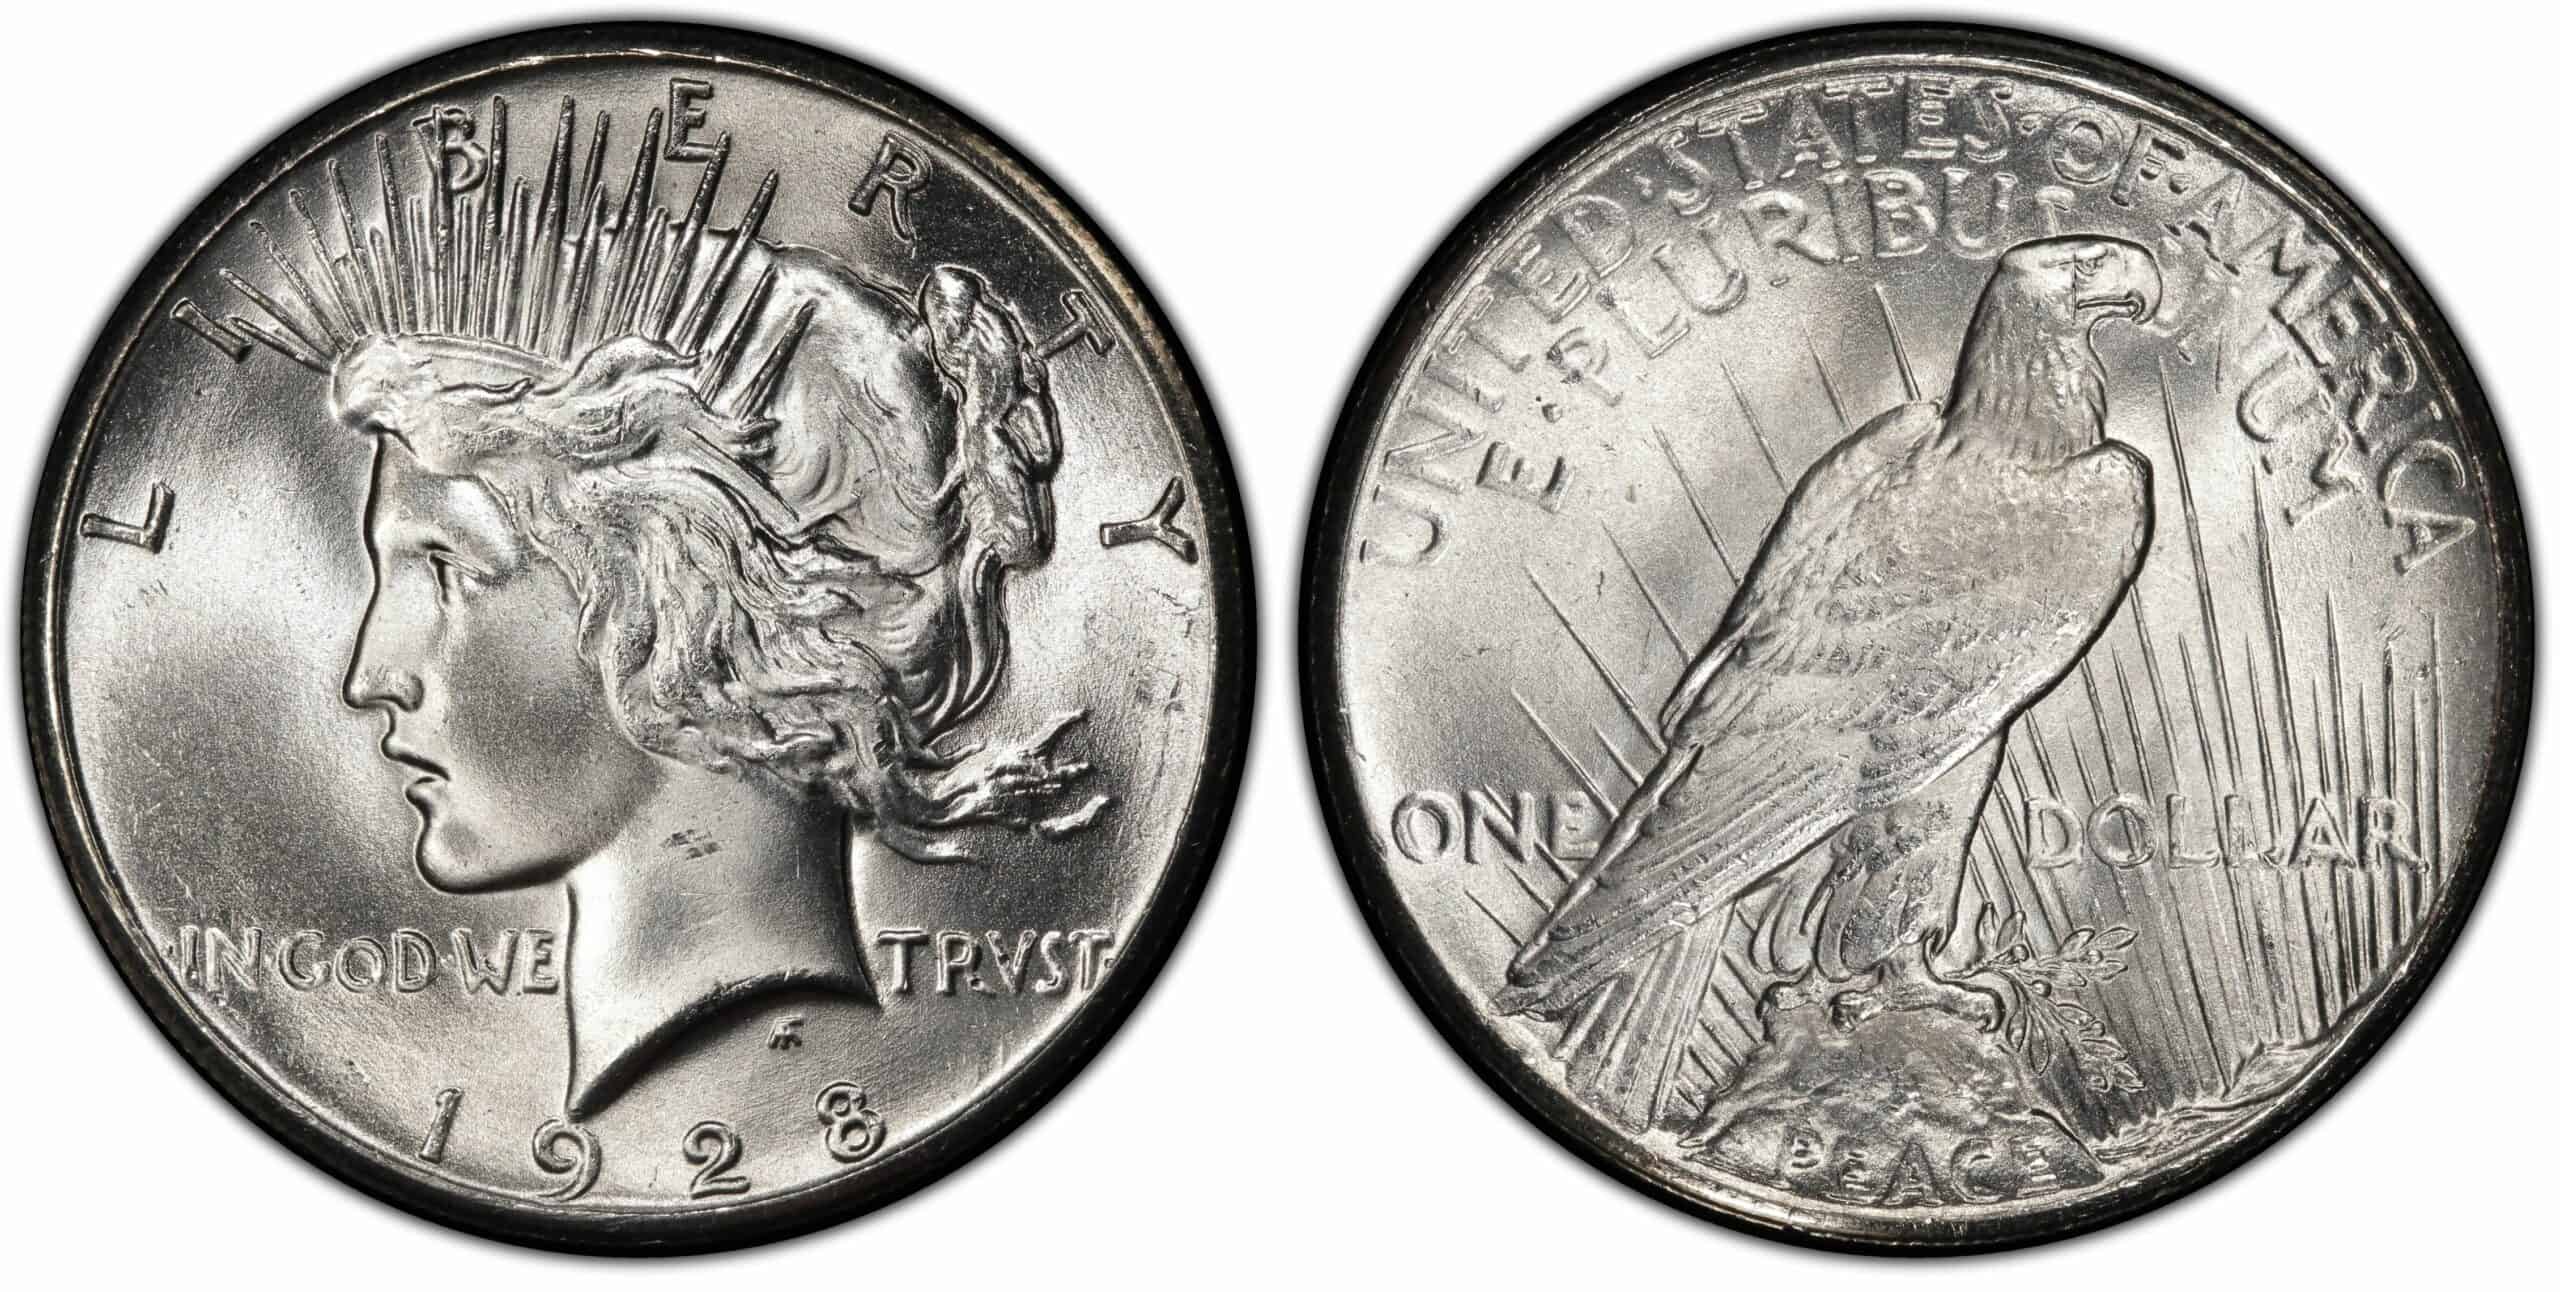 1928 Silver Dollar Details